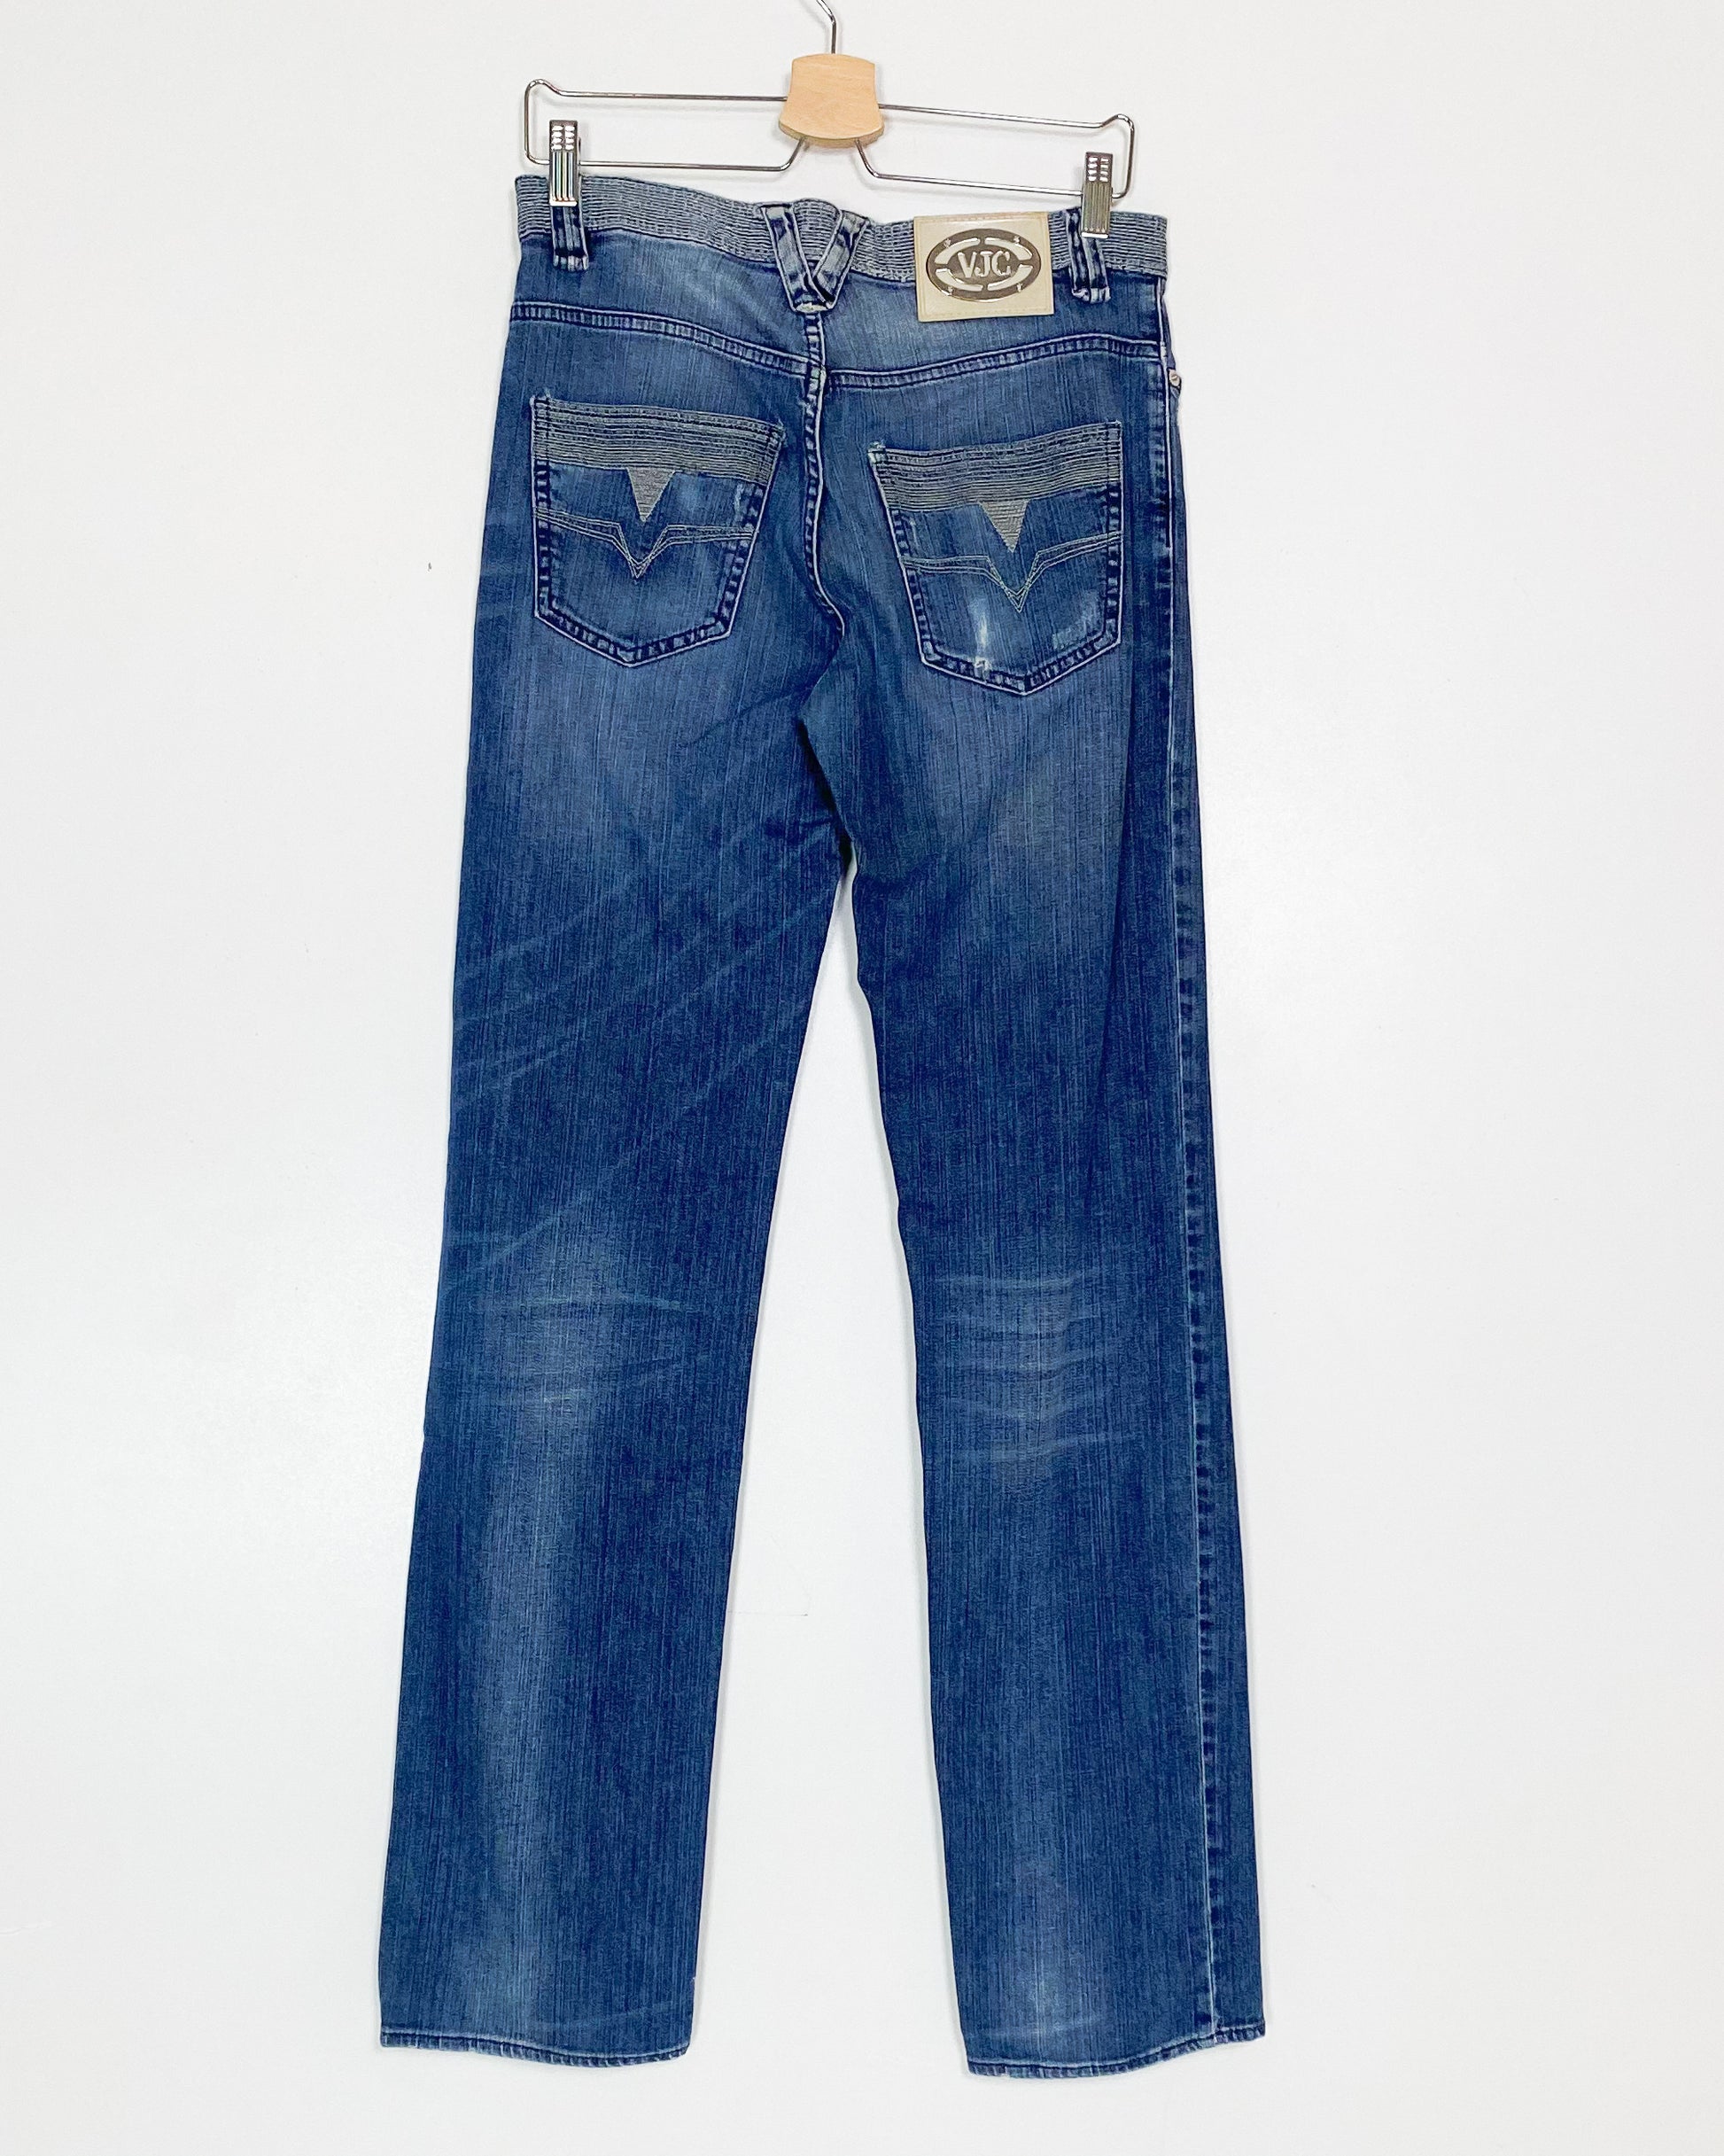 Low Waist Jeans - Ita 46